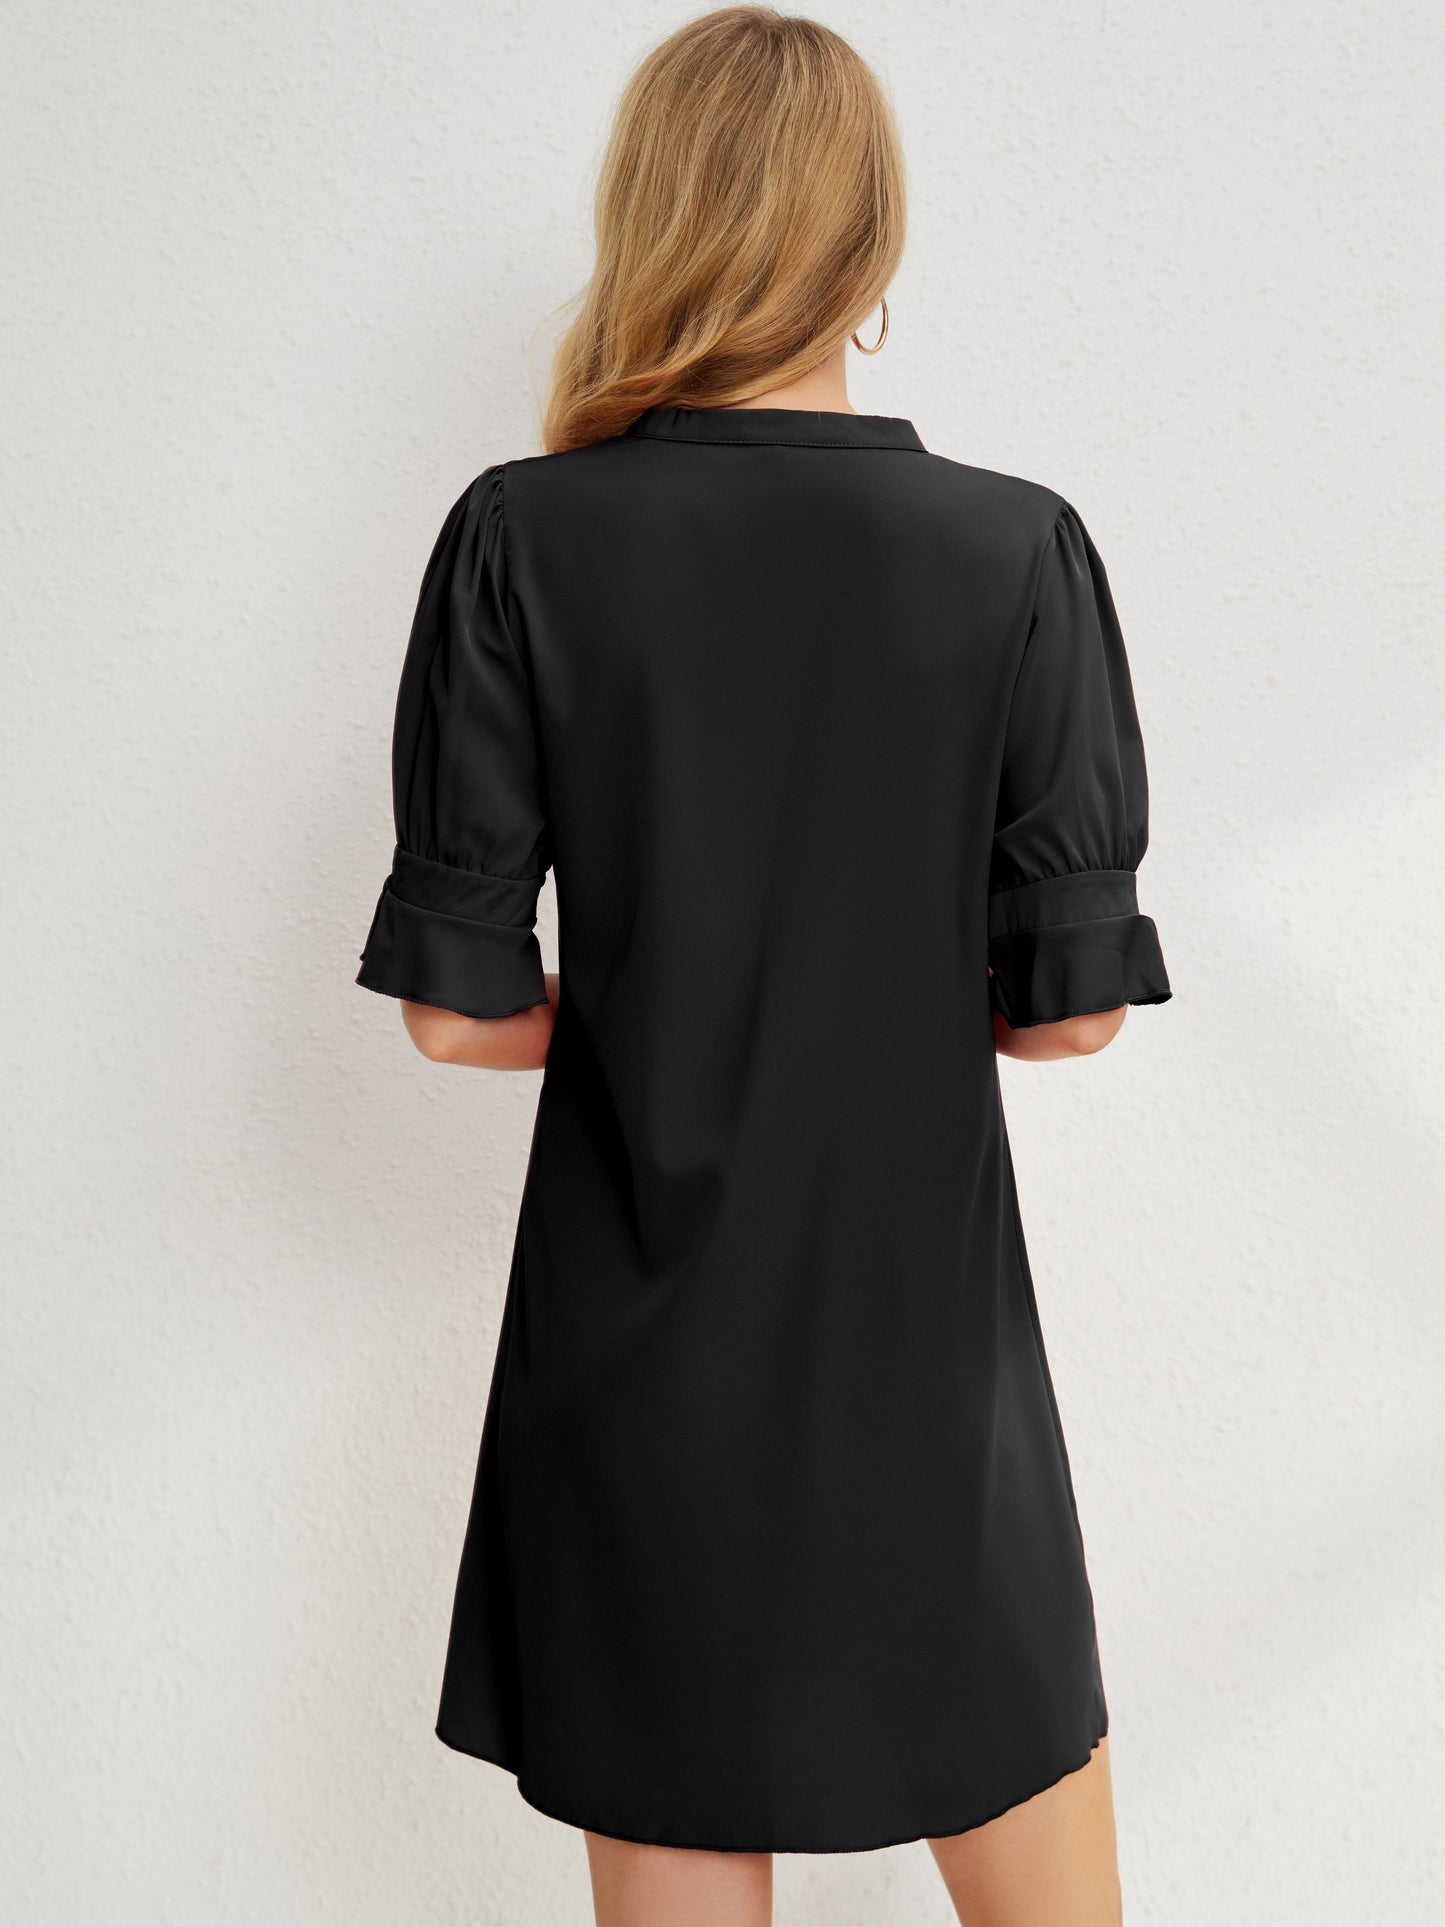 Antmvs Solid V Neck Dress, Casual Short Sleeve Dress For Spring & Summer, Women's Clothing